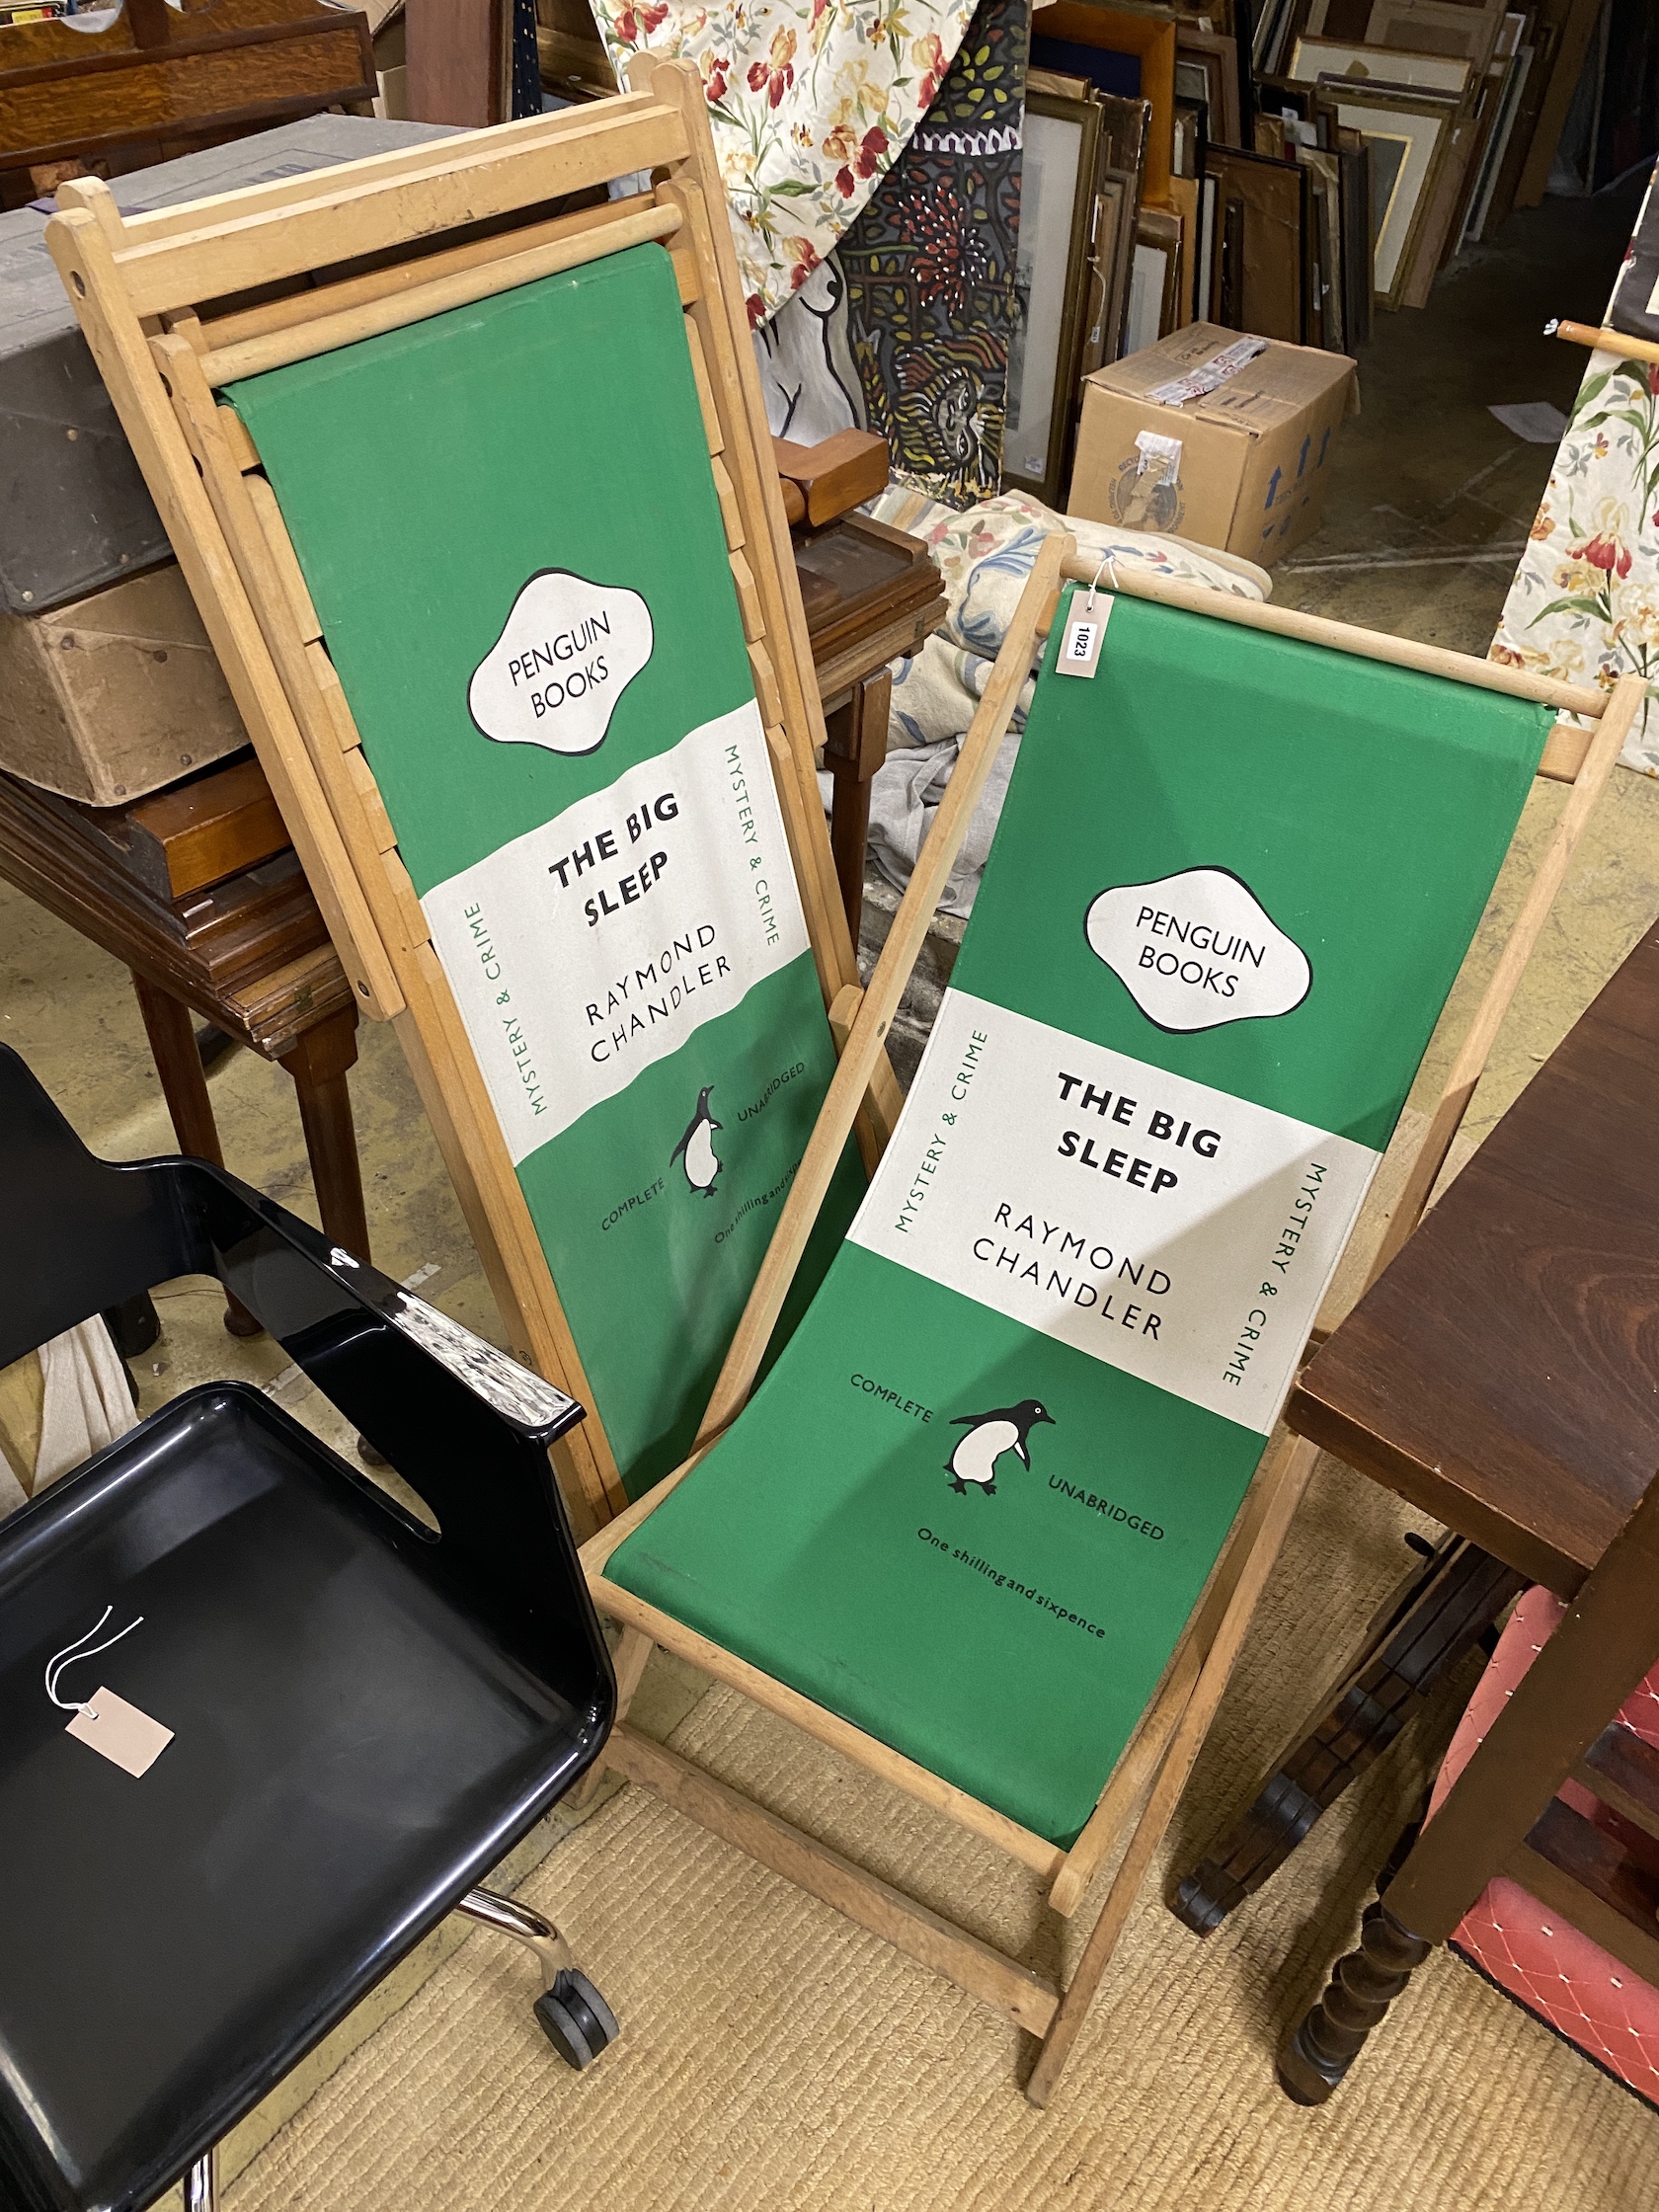 Three 'Penguin books' deck chairs